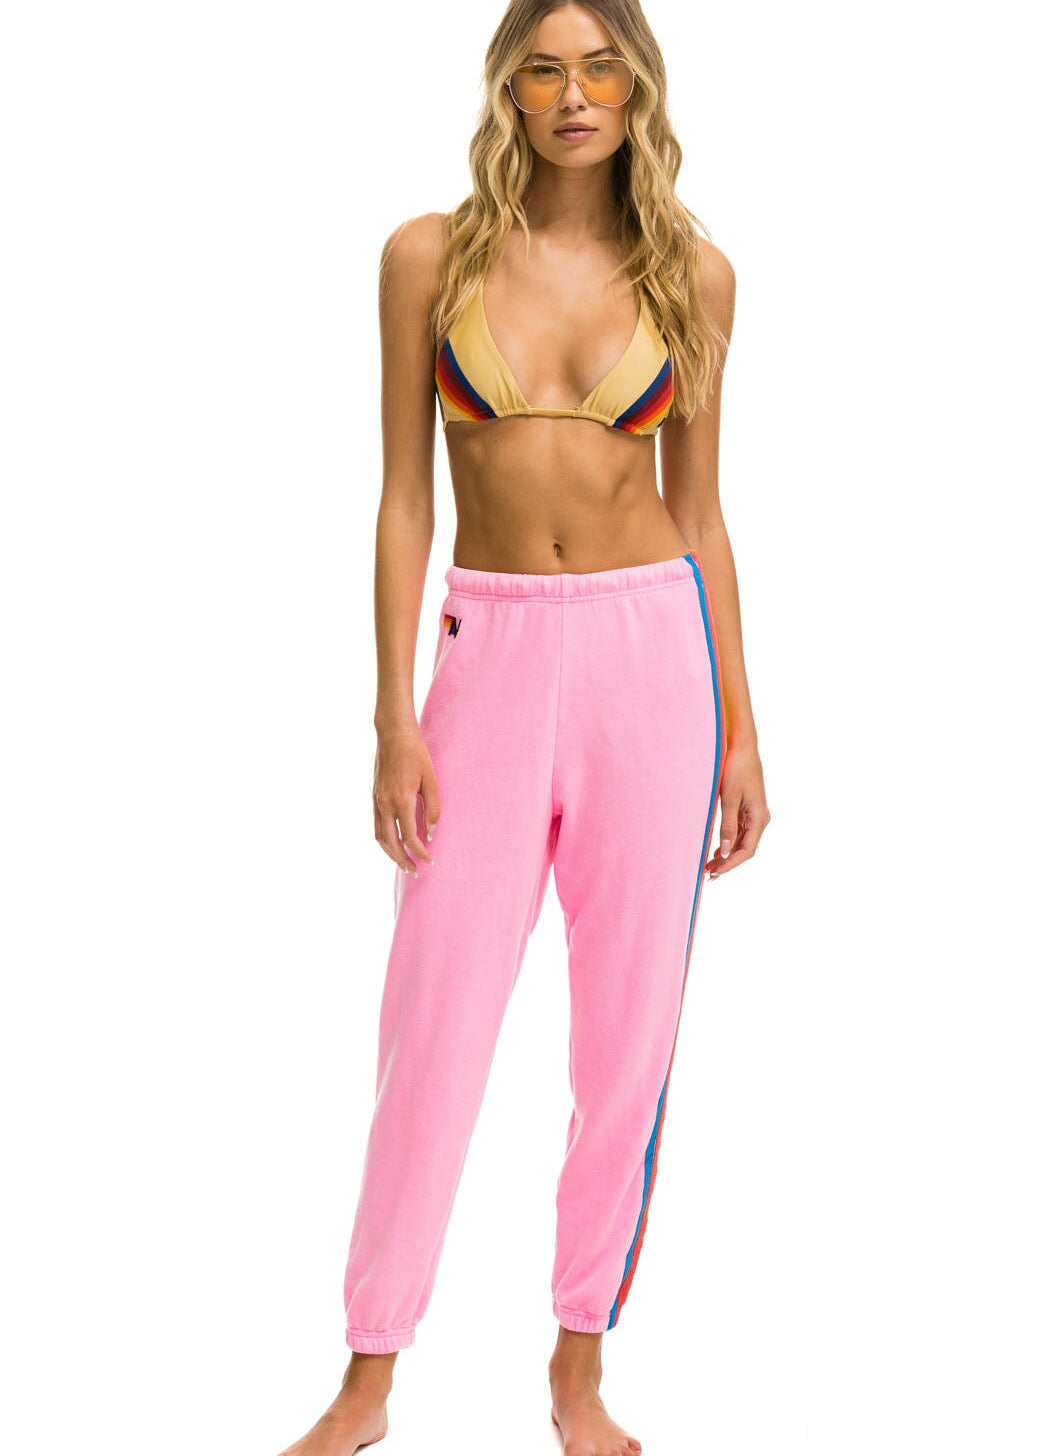 5-stripe-sweatpants-neon-pink-neon-rainbow-womens-sweatpants-aviator-nation-211873_3000x_bd1021a5-7e52-4f6c-ae10-0ed4ff2900e8.jpg